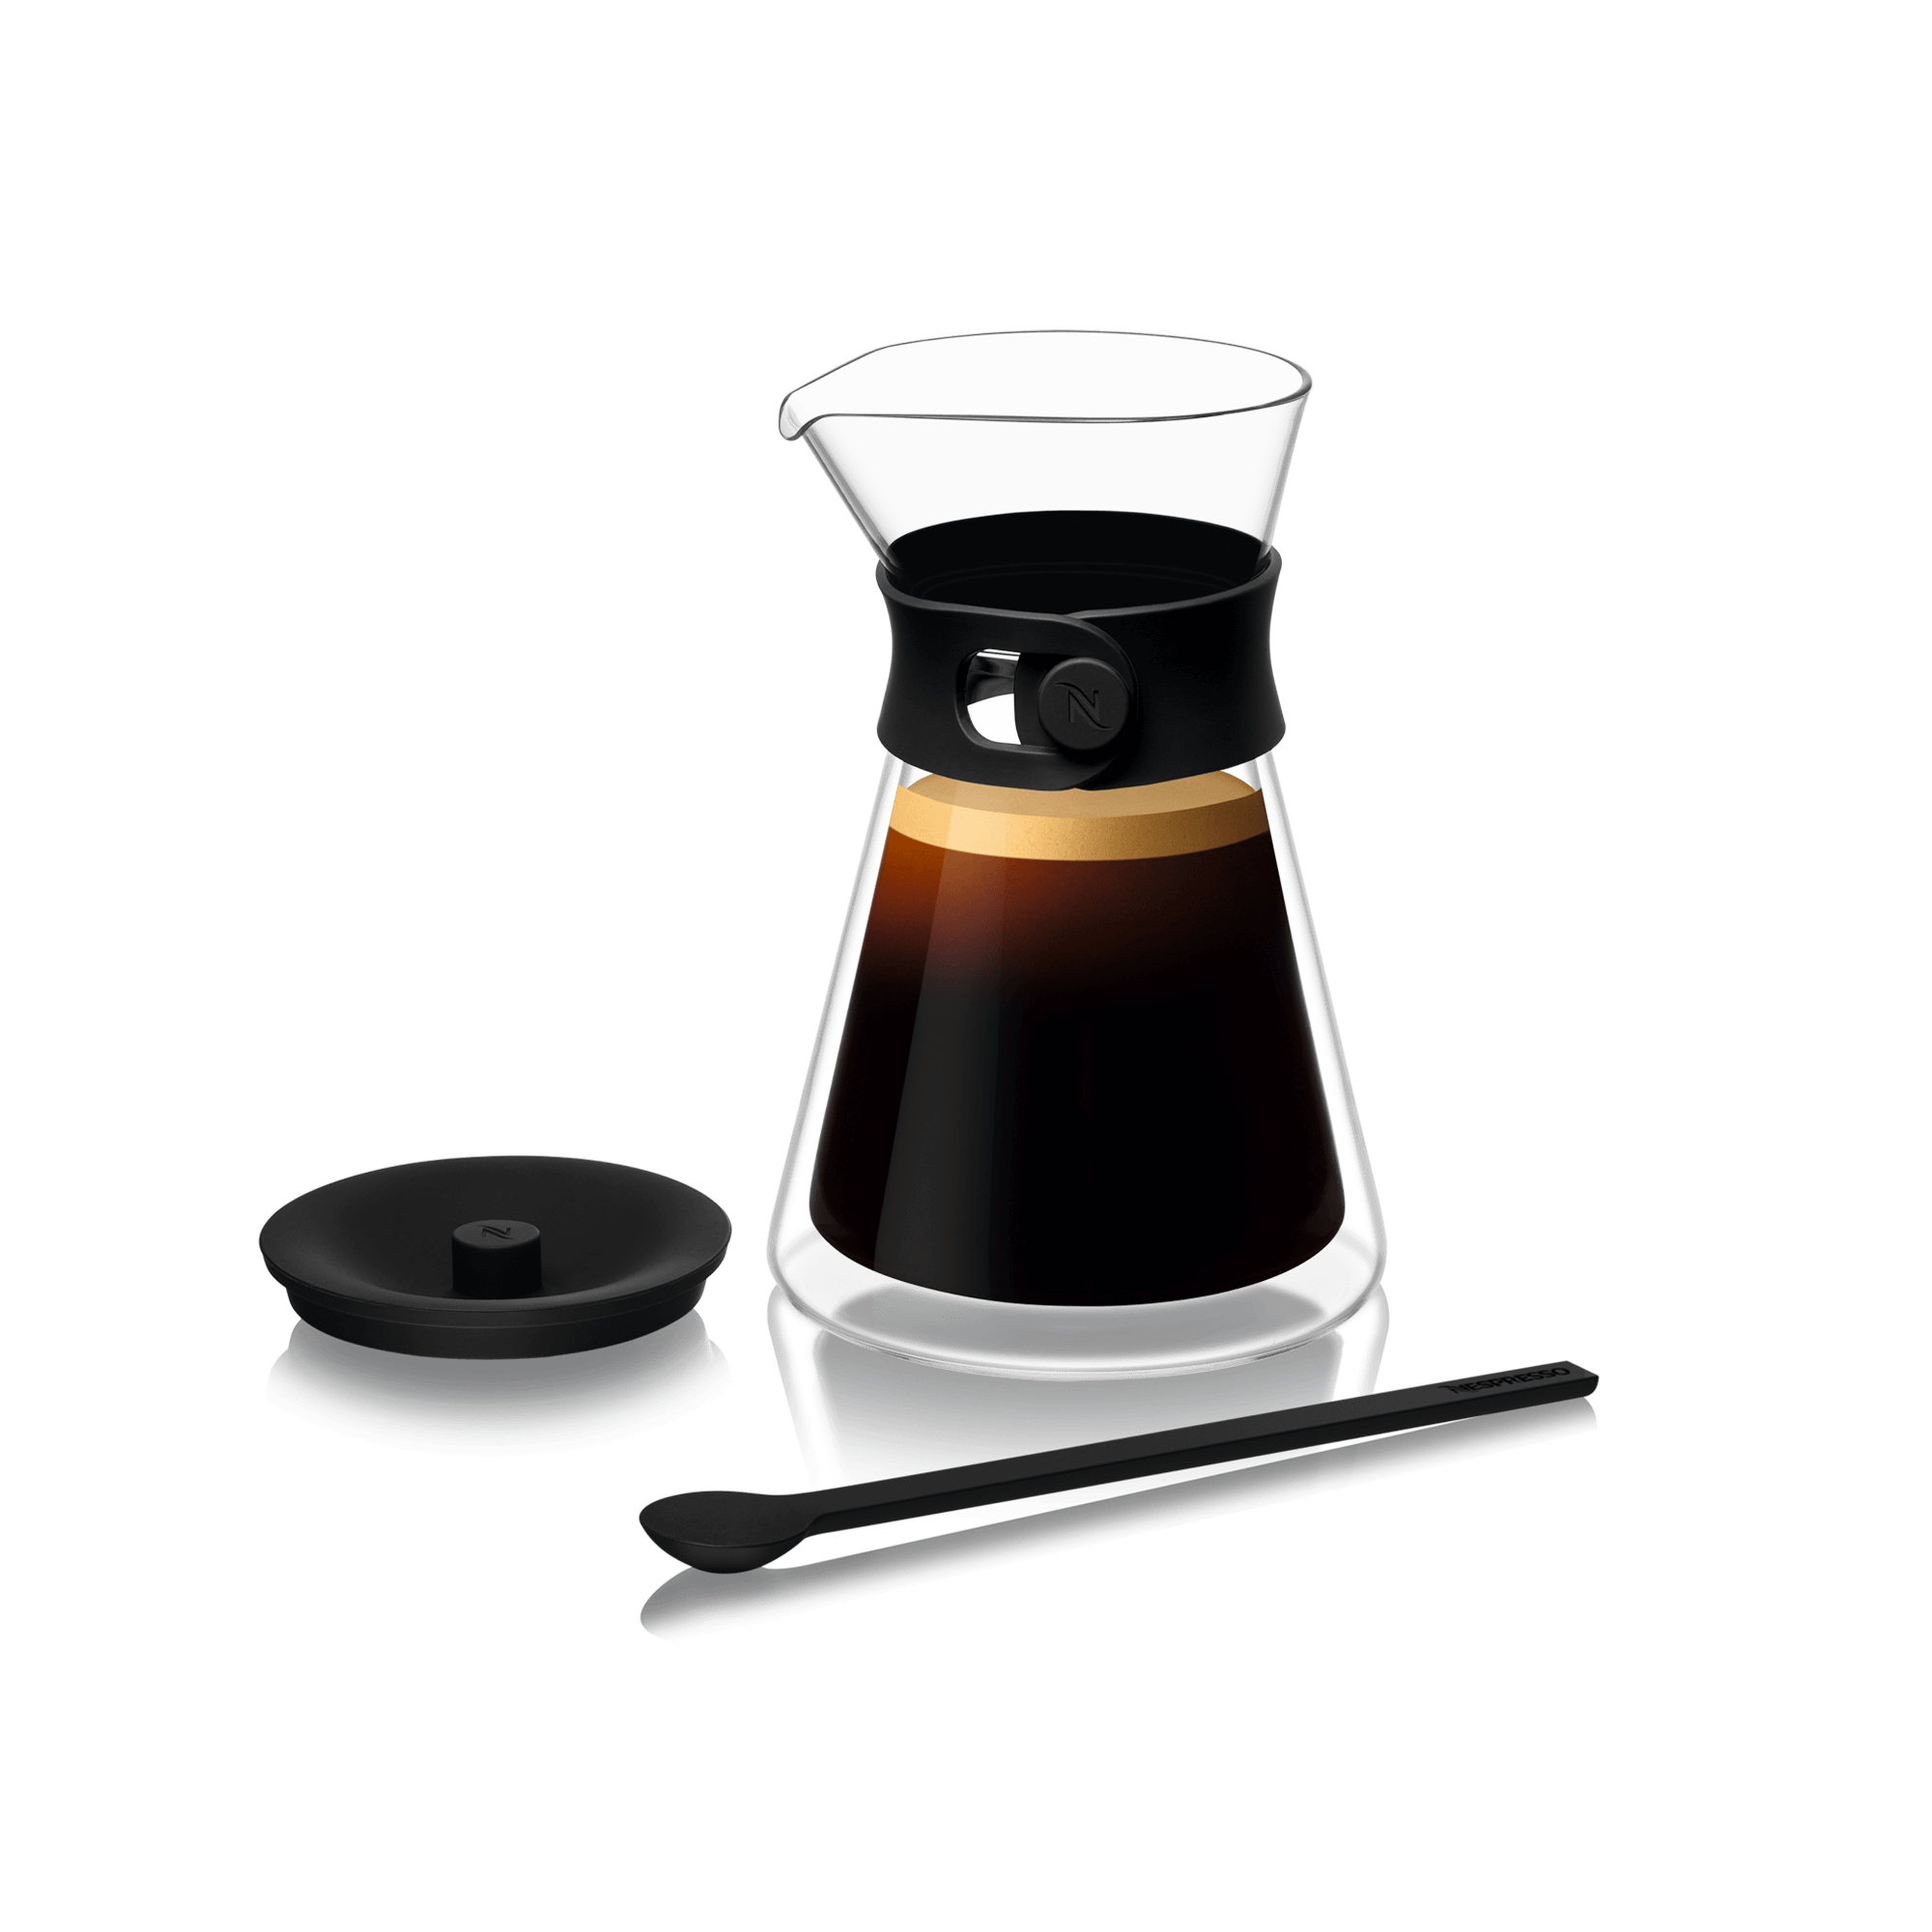 Review: Nespresso's latest coffee tech Vertuo pods Carafe Pour